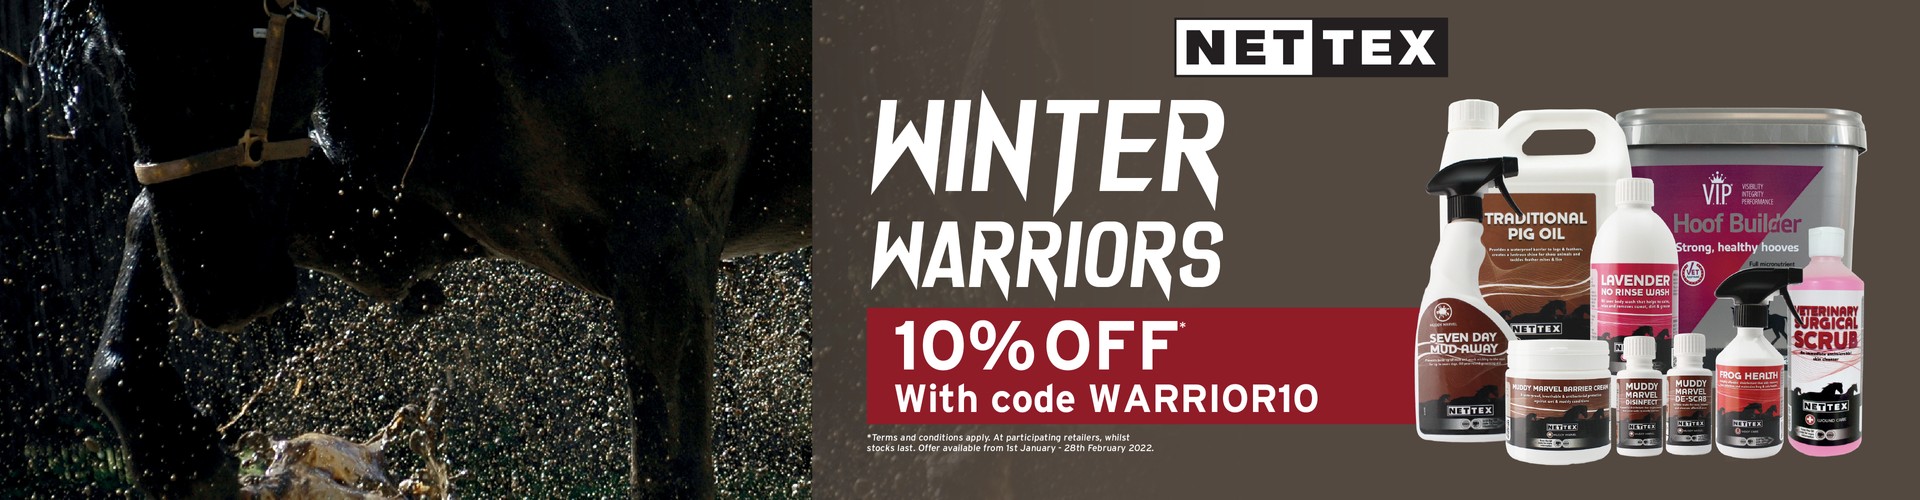 Nettex winter warriors